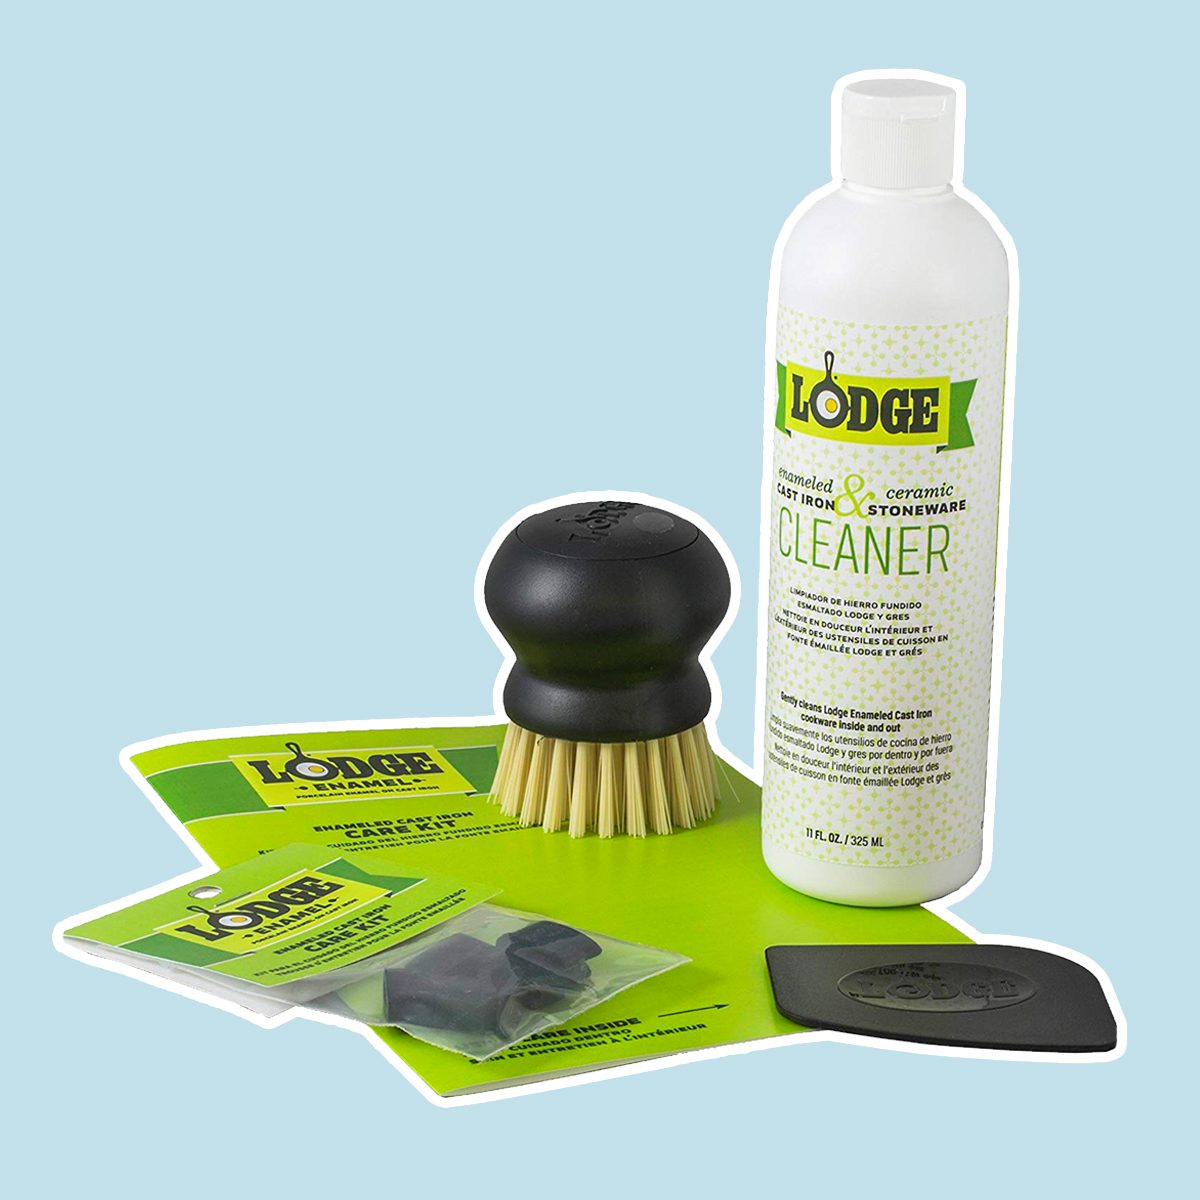 Caron & Doucet 236 ml Cooktop Cleaner Kit - Cast Iron Soap (100